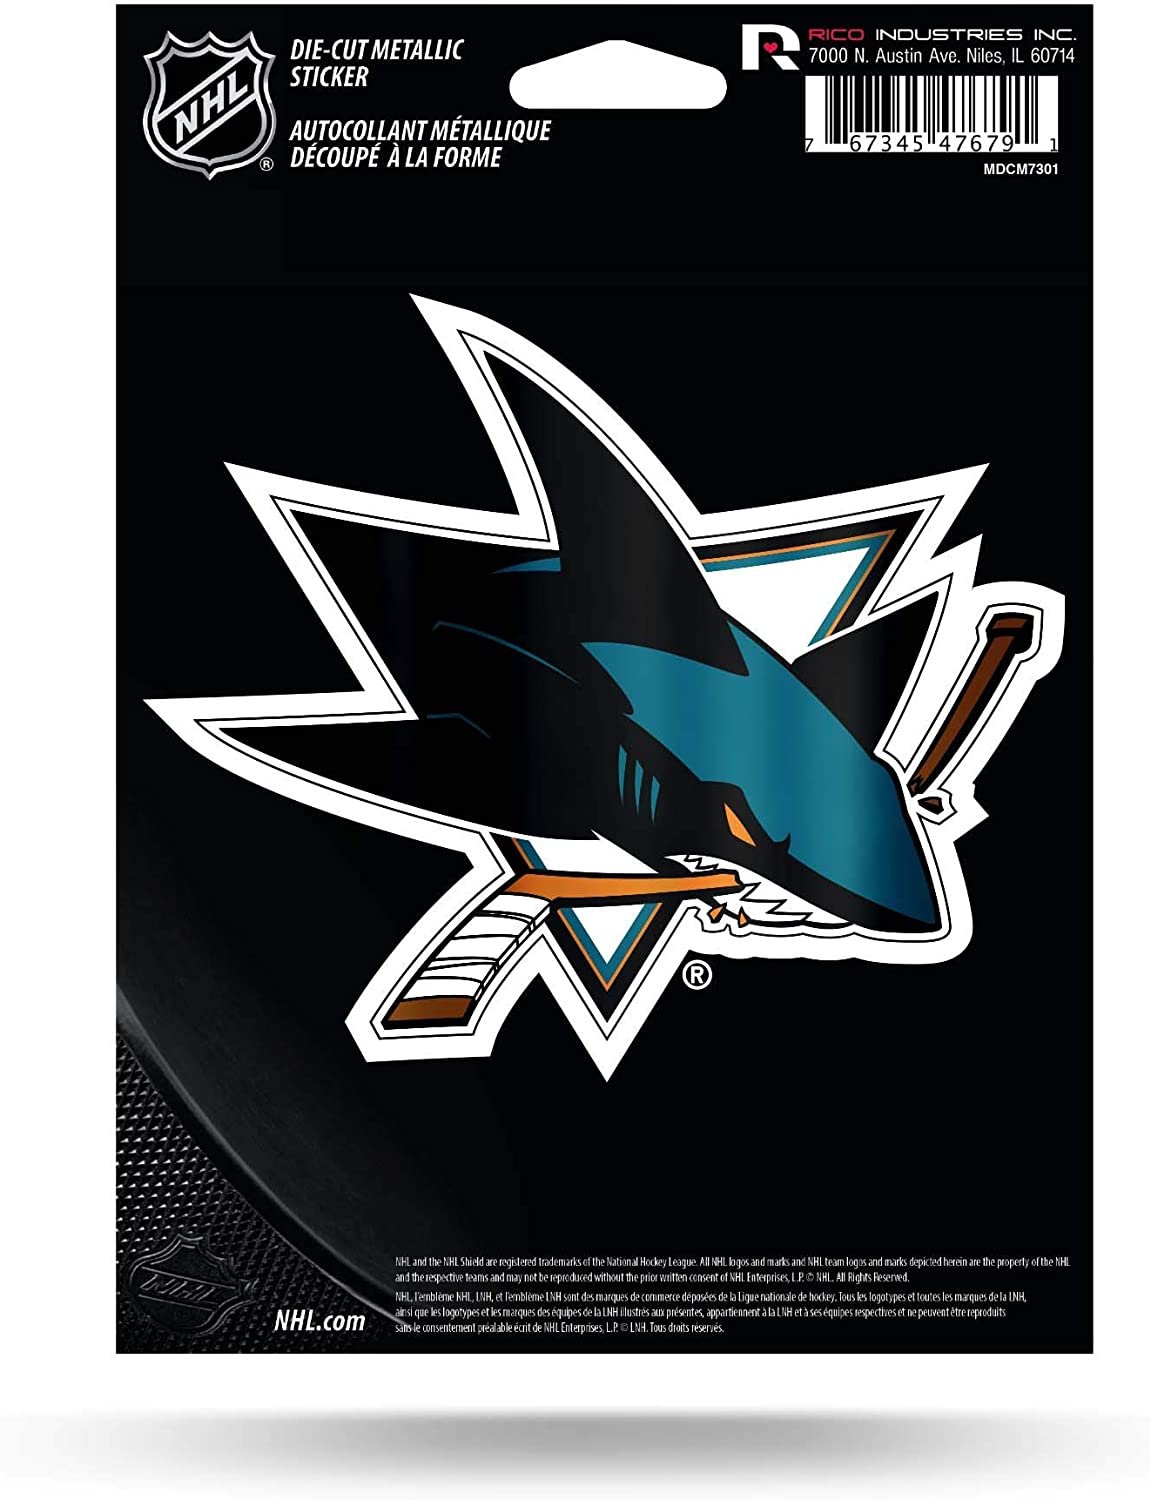 San Jose Sharks 5 Inch Die Cut Decal Sticker, Metallic Shimmer Design, Full Adhesive Backing